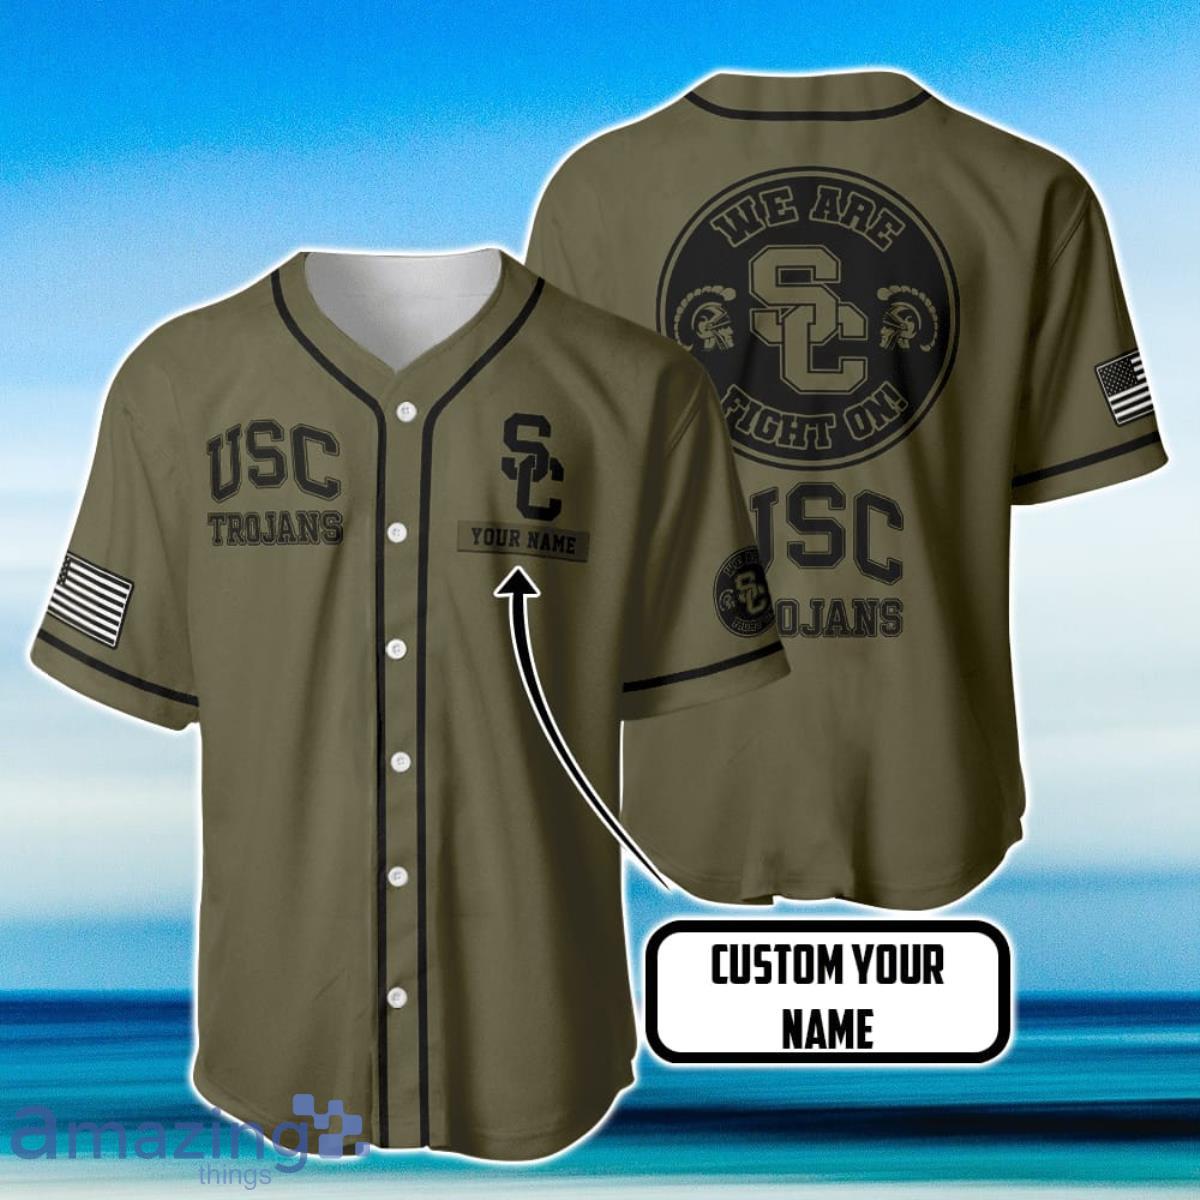 USC Trojans Football Baseball Jersey Custom Name Product Photo 1